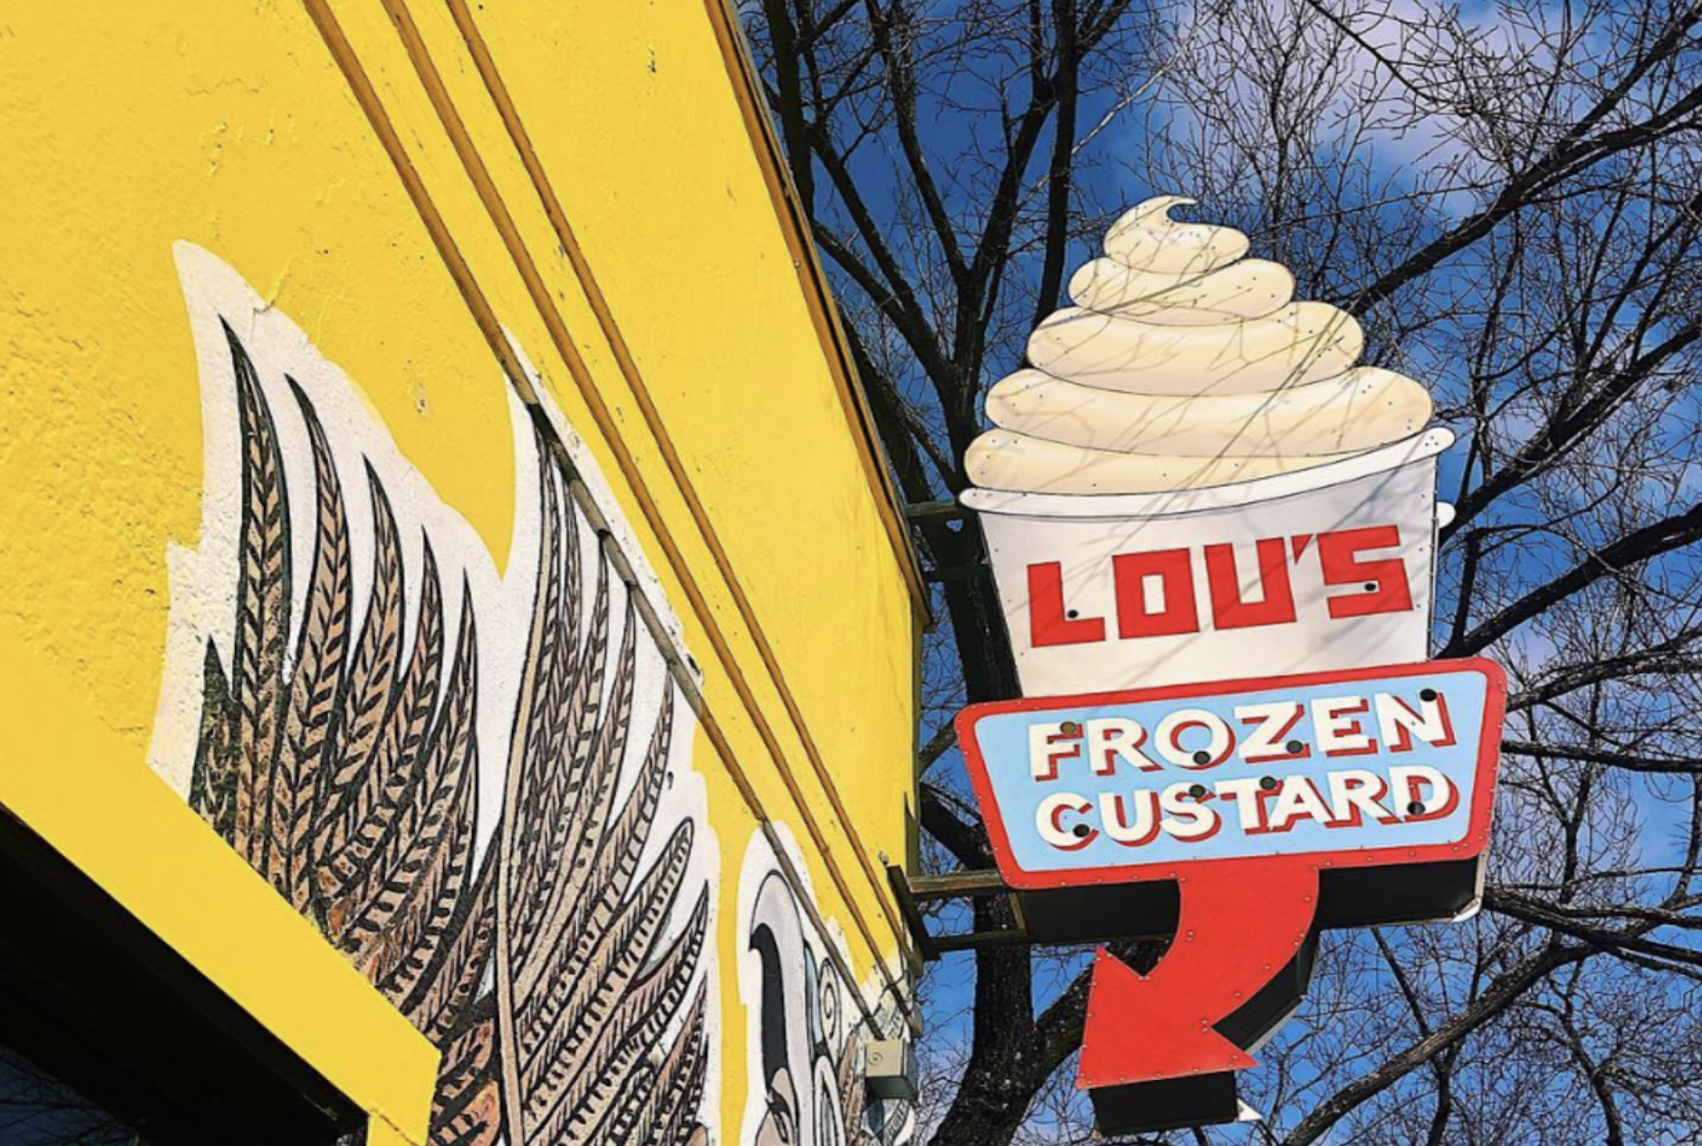 Lou's frozen custard sign